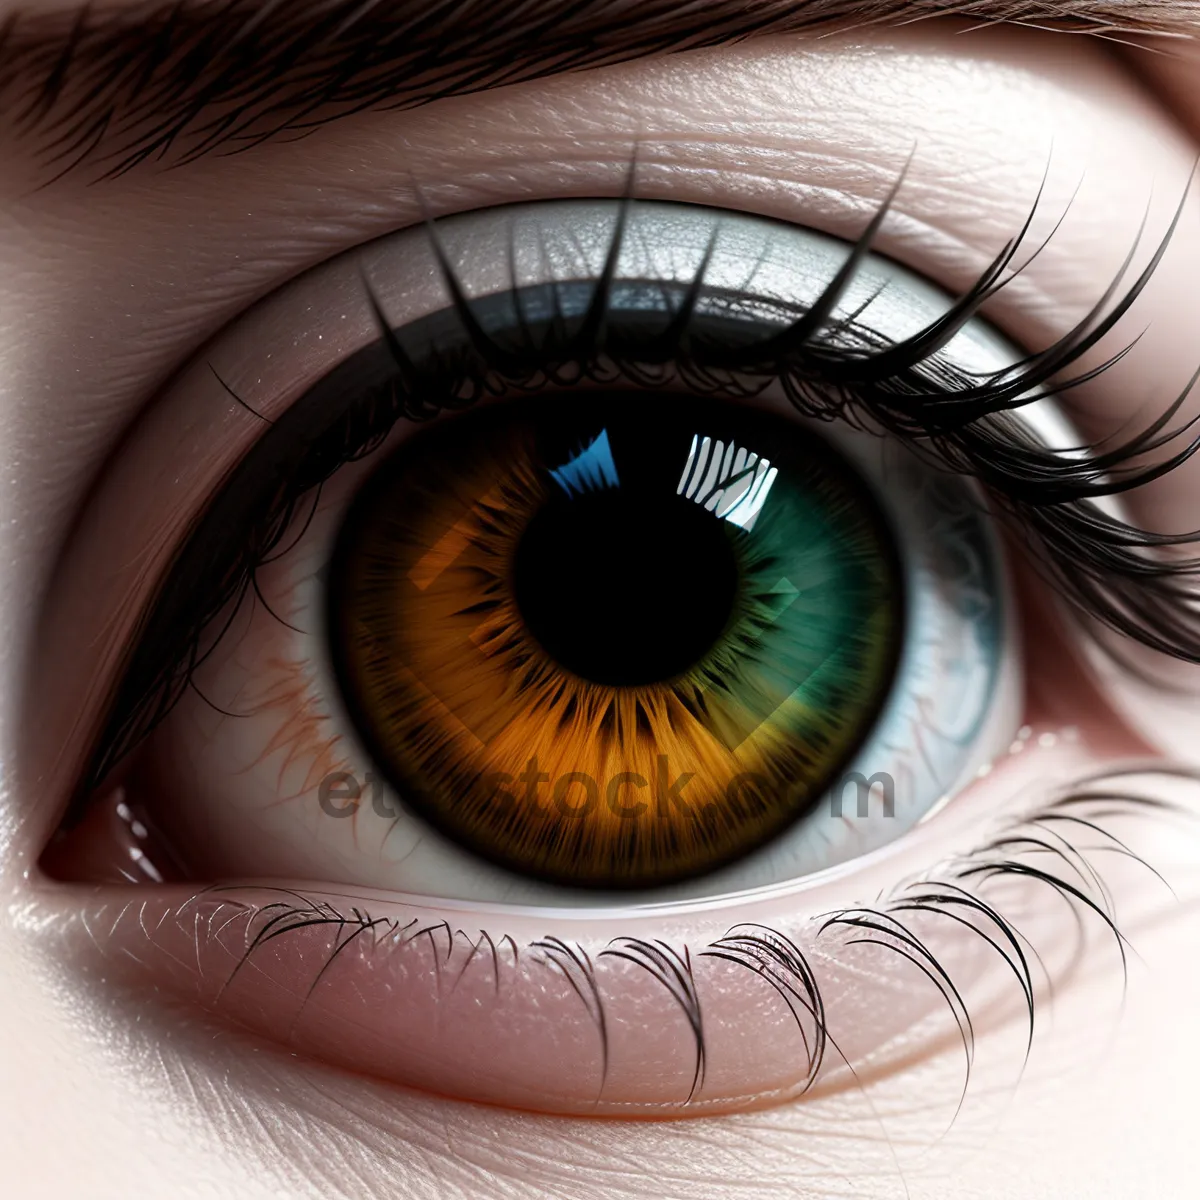 Picture of Vibrant Iris - Close-up Eyeball